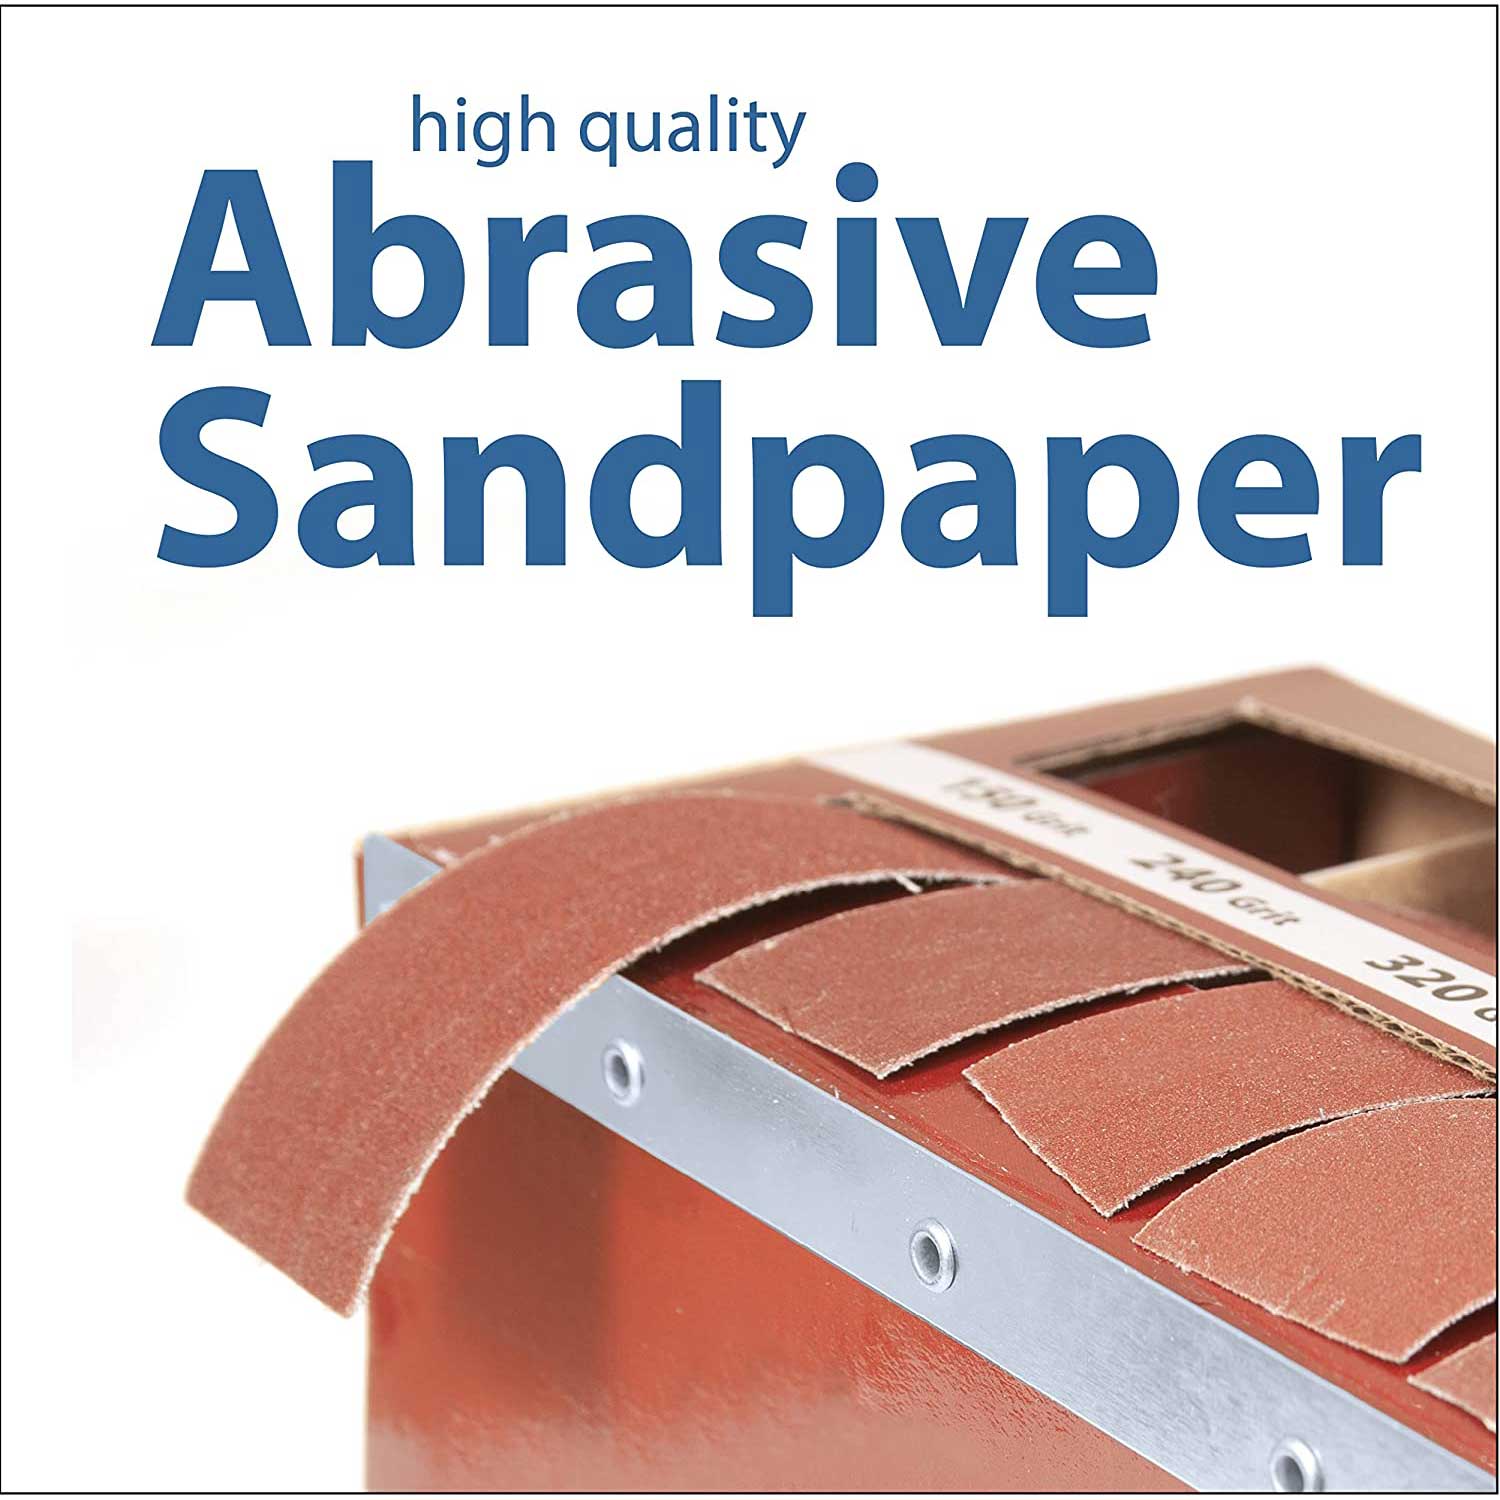 Steel Sandpaper Roll Dispenser Holds Five 1" x 20' Abrasive Rolls